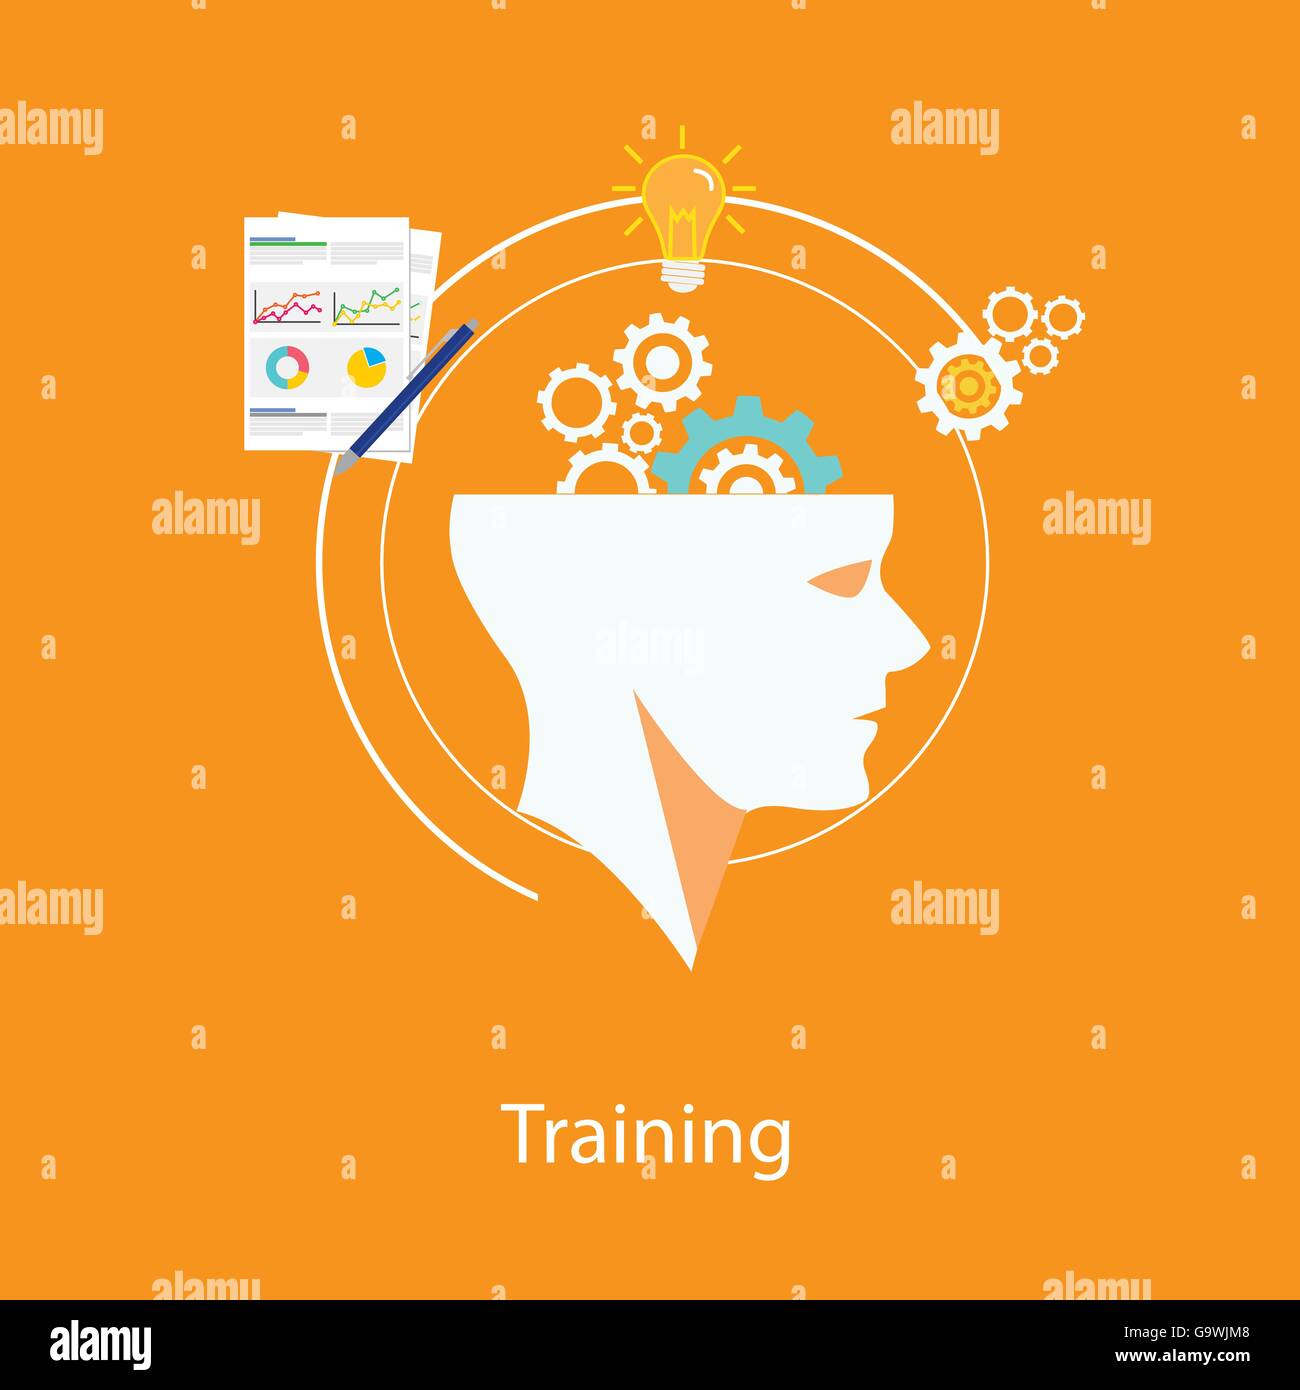 management training human resource illustration Stock Vector